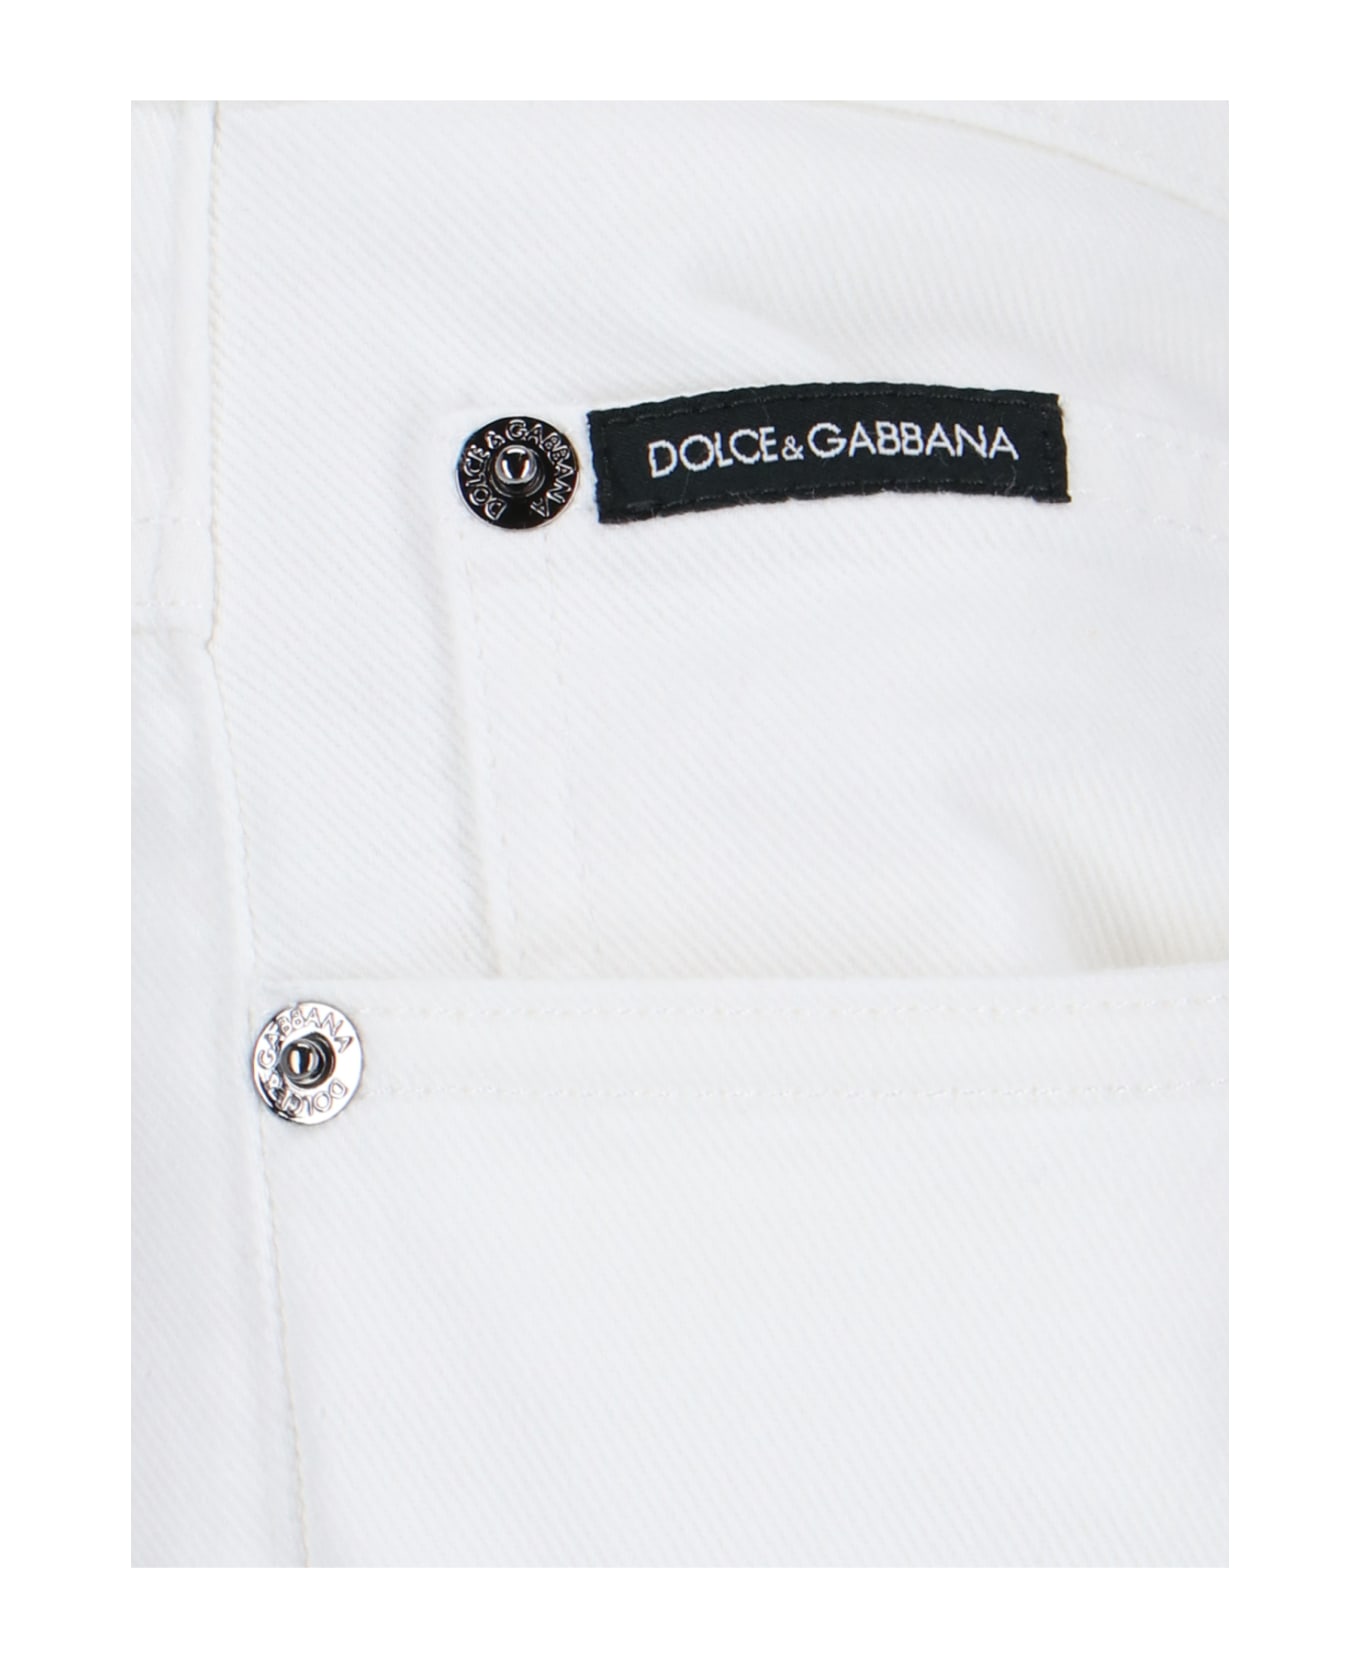 Dolce & Gabbana Stretch Jeans - White